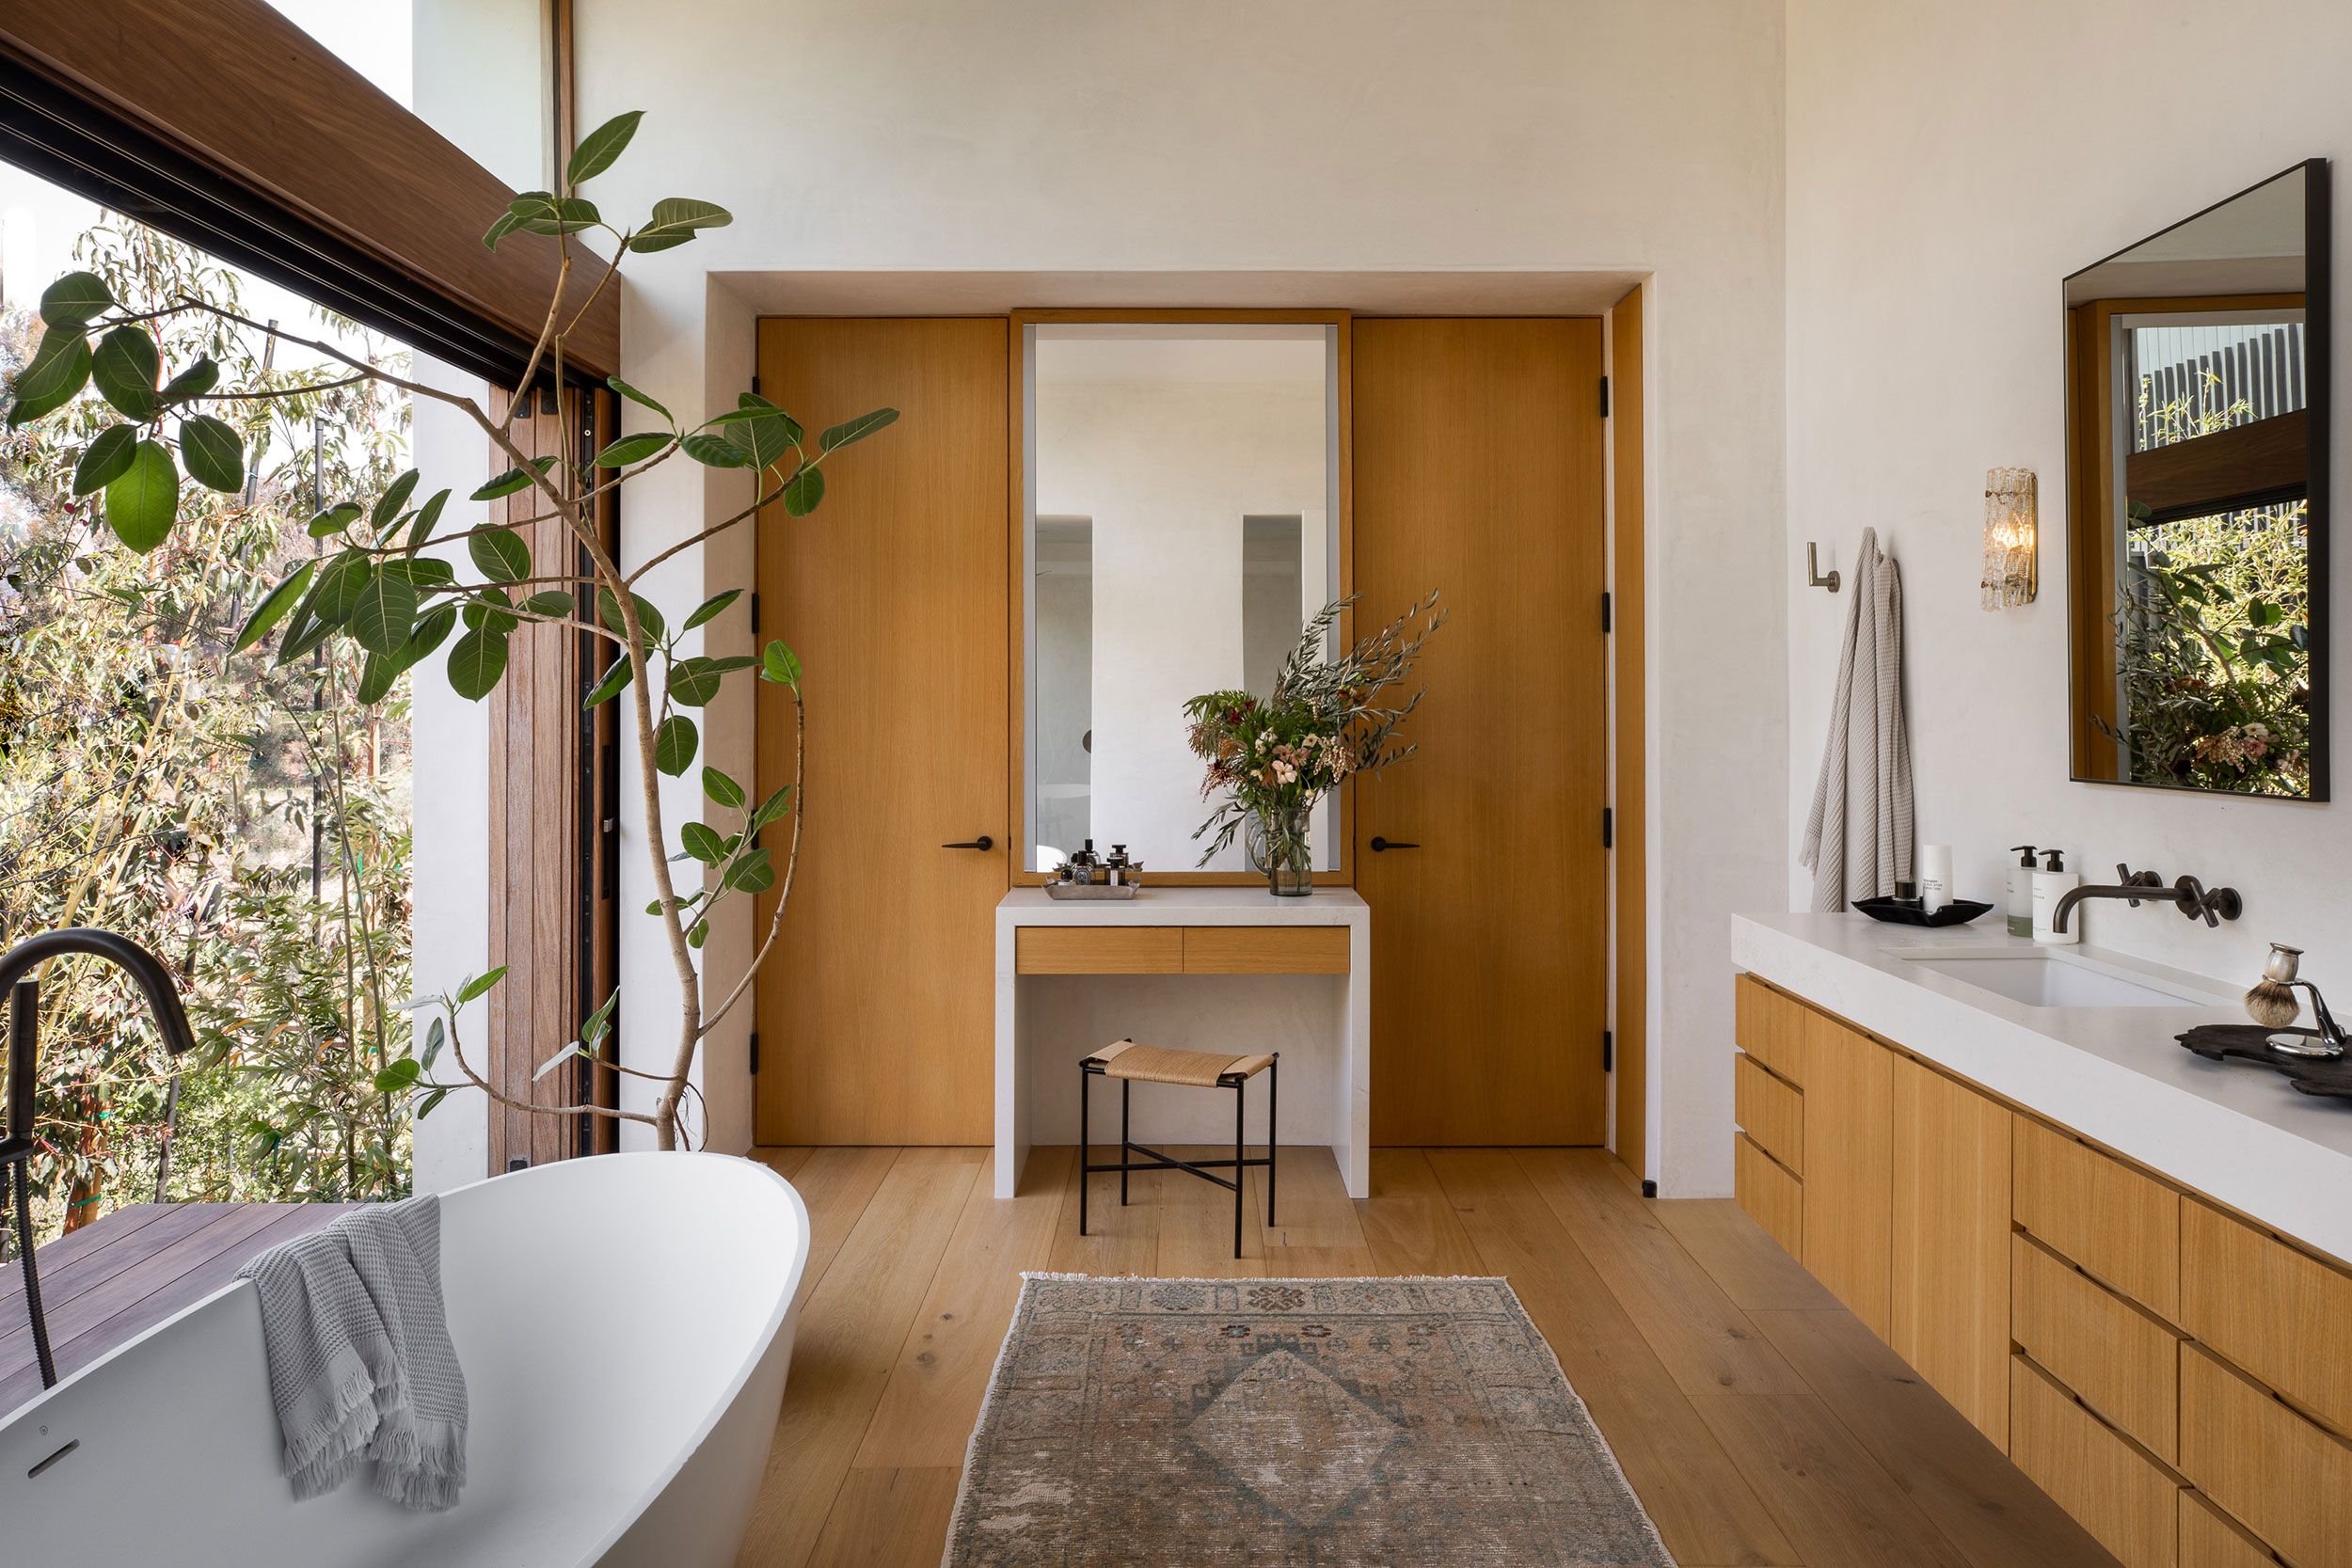 50 Luxurious Bathrooms - Best Bathroom Ideas with Modern Design